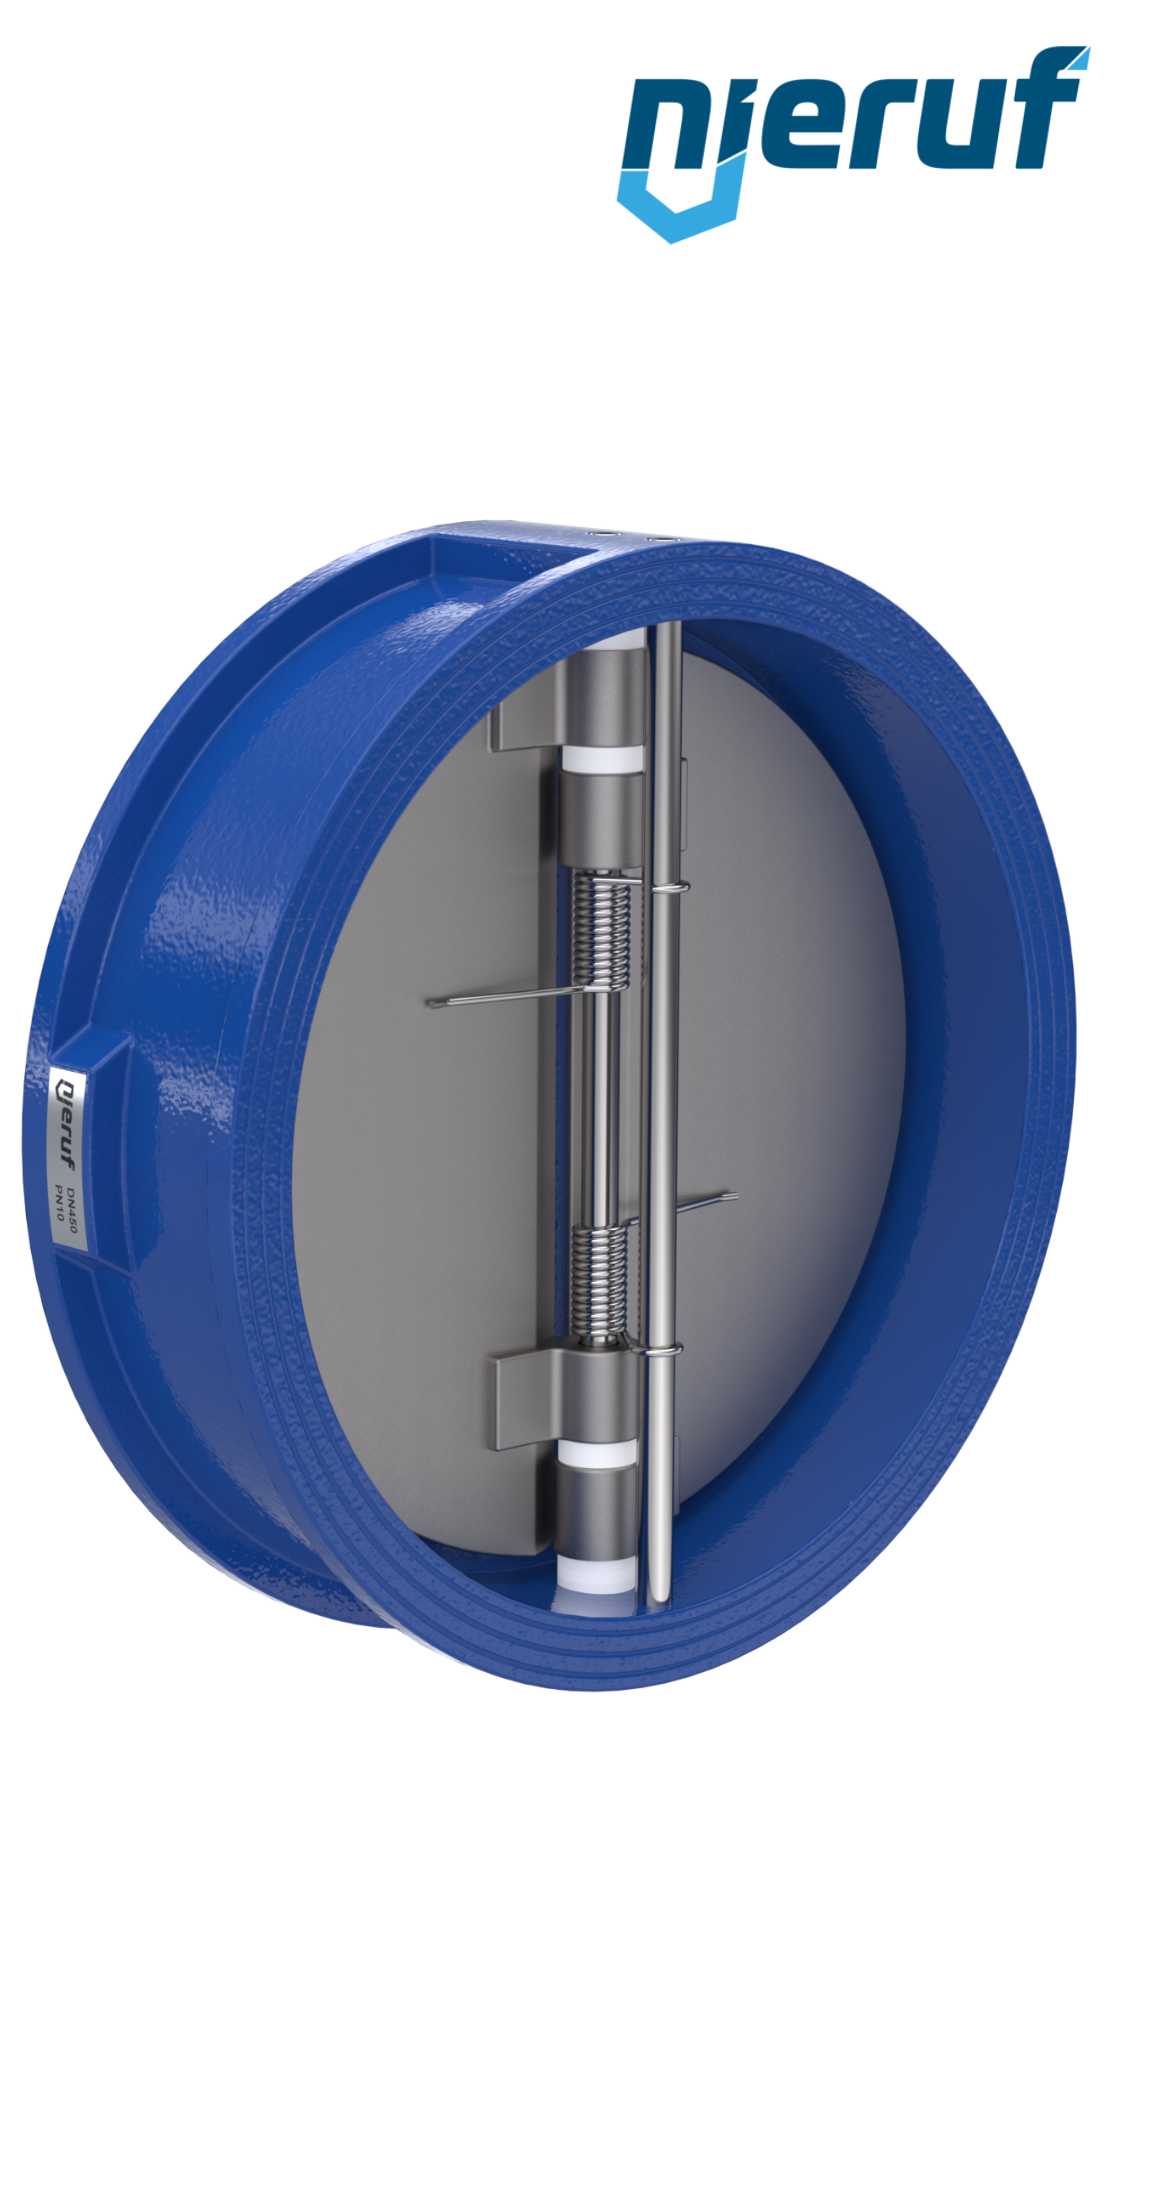 dual plate check valve DN450 DR01 GGG40 epoxyd plated blue 180µm FKM (Viton)